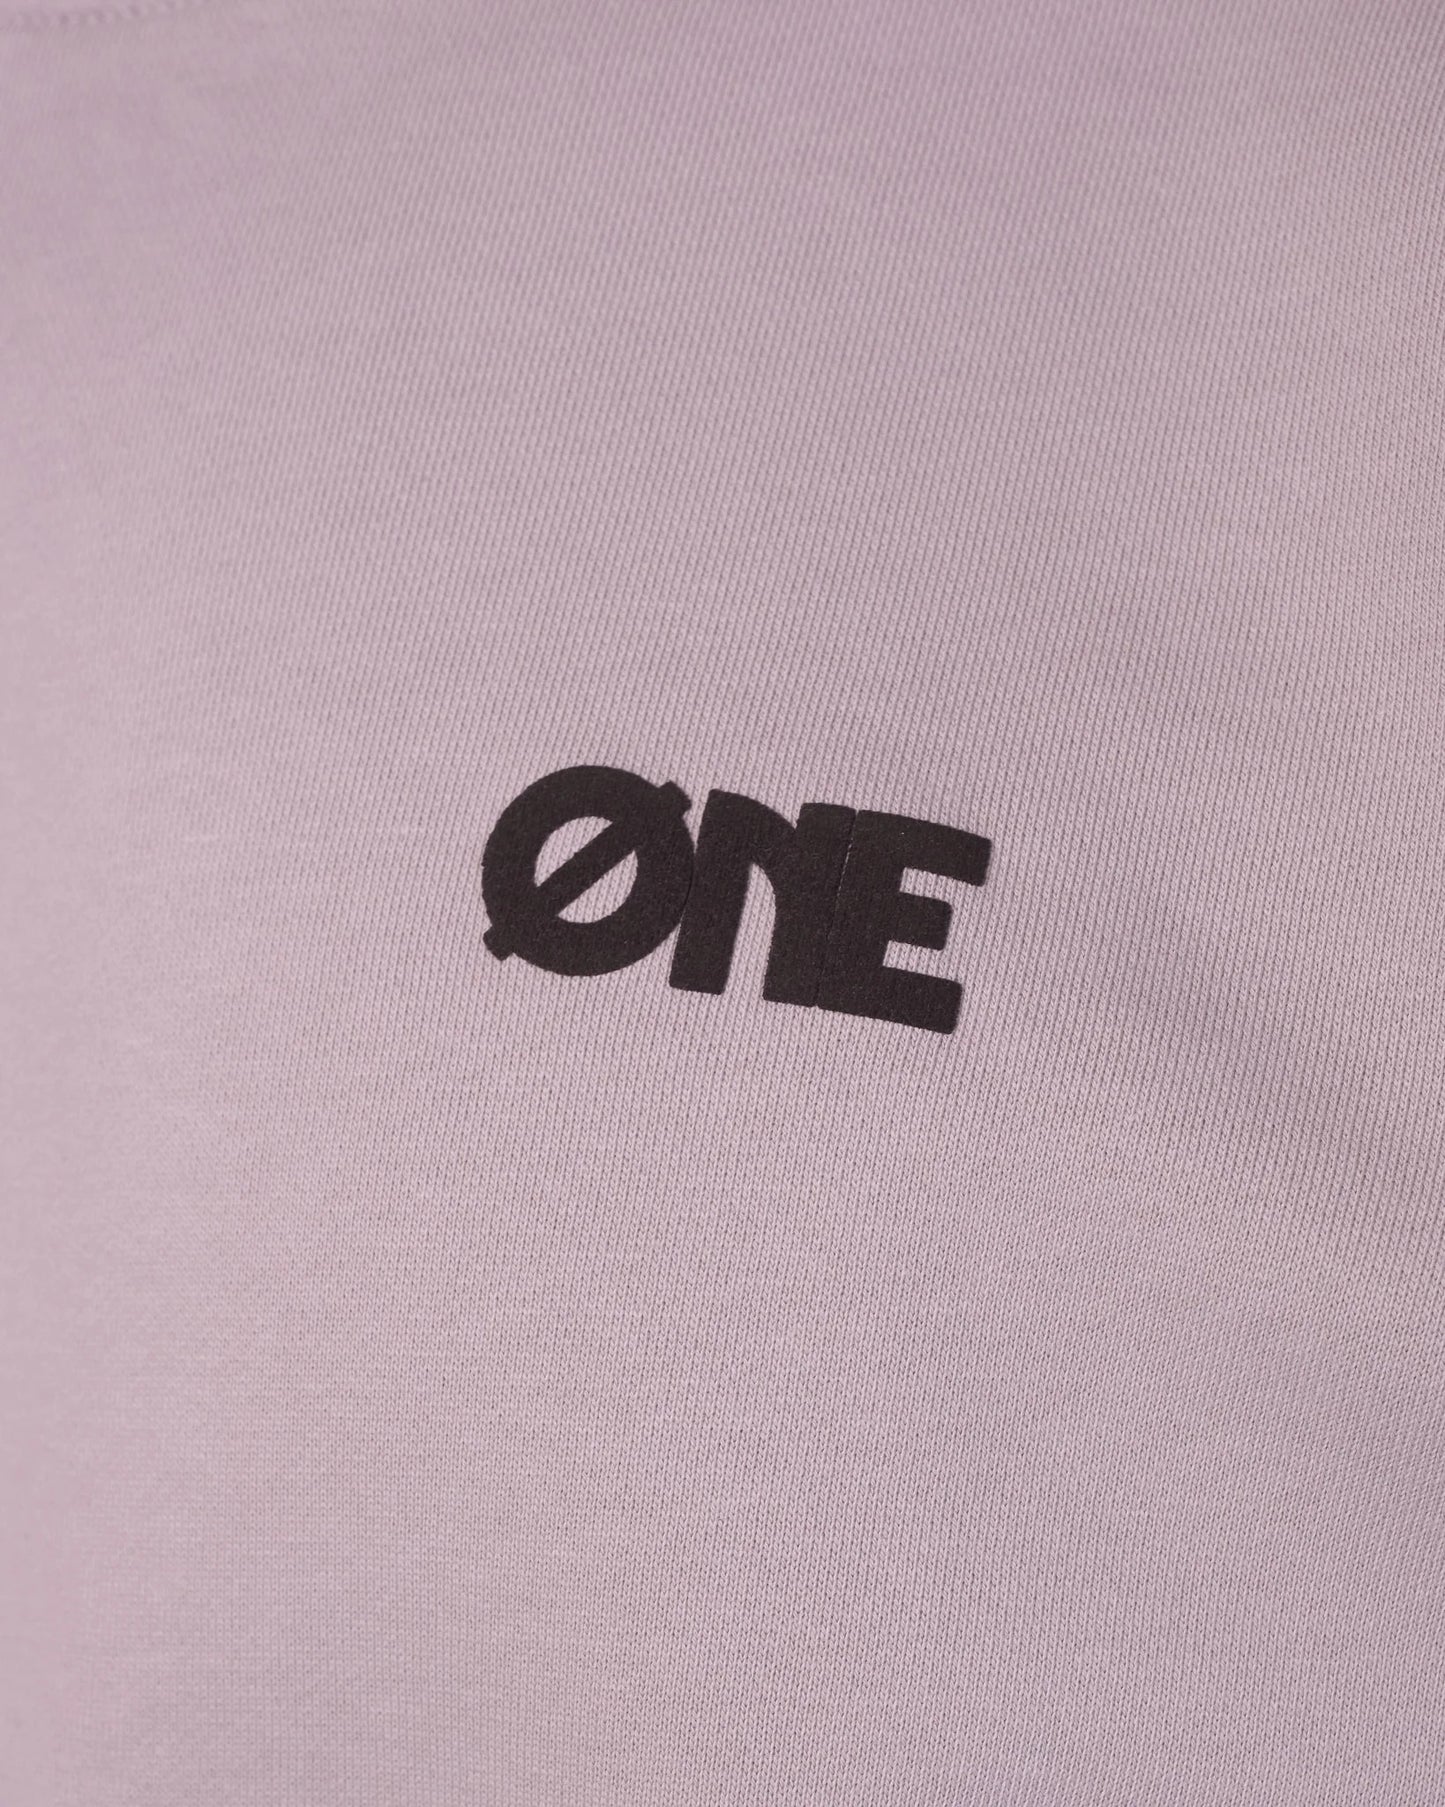 ØNE | Puff Logo Sweater - Grey